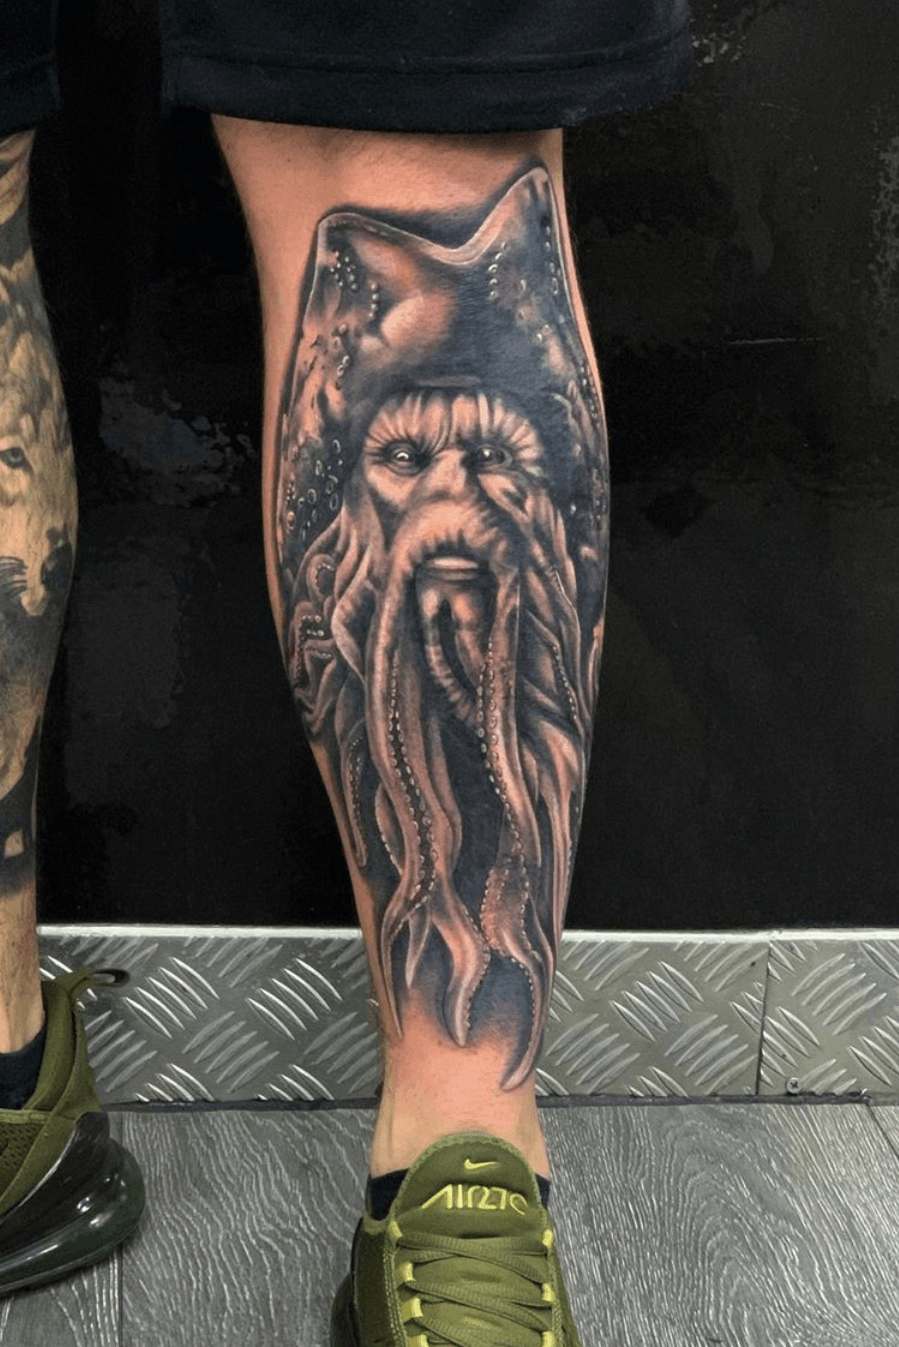 Body Art Tattoo  Pirates of the Caribbean coin cover up Start of a sleeve  by Josh wwwtattooistinkentcom Instagram  joshhobdentattoo  Facebook